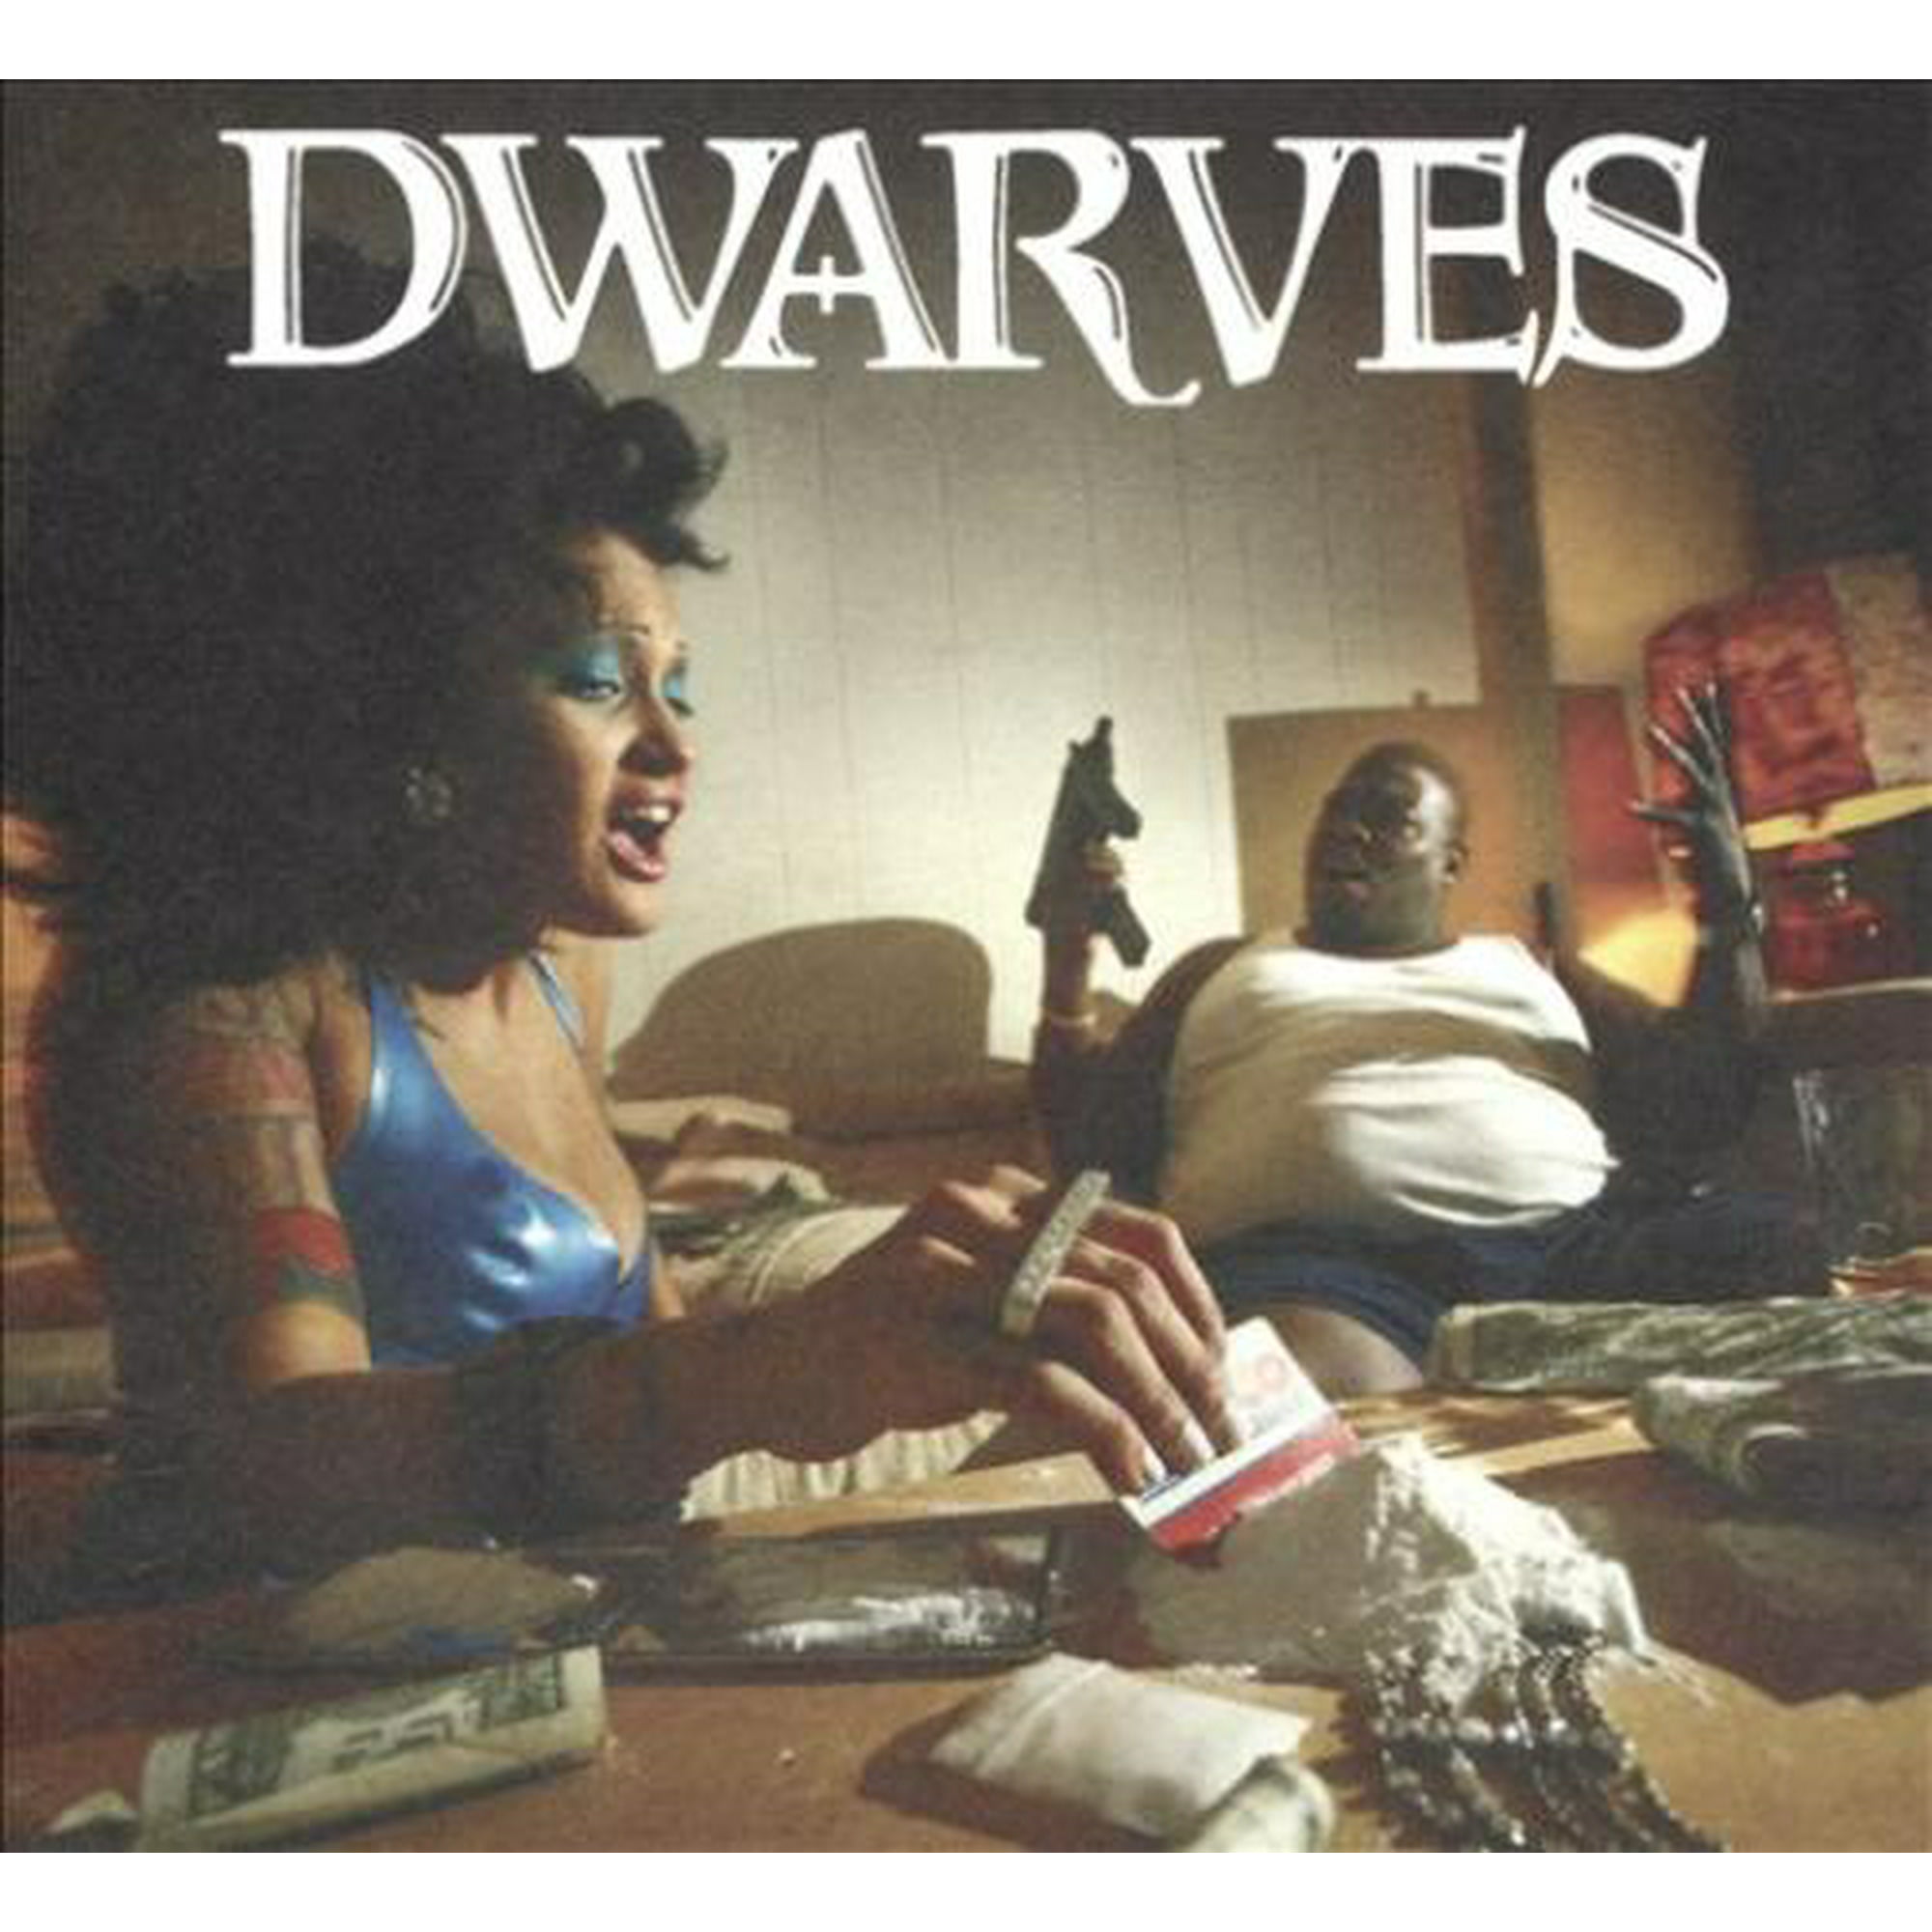 The dwarves album covers